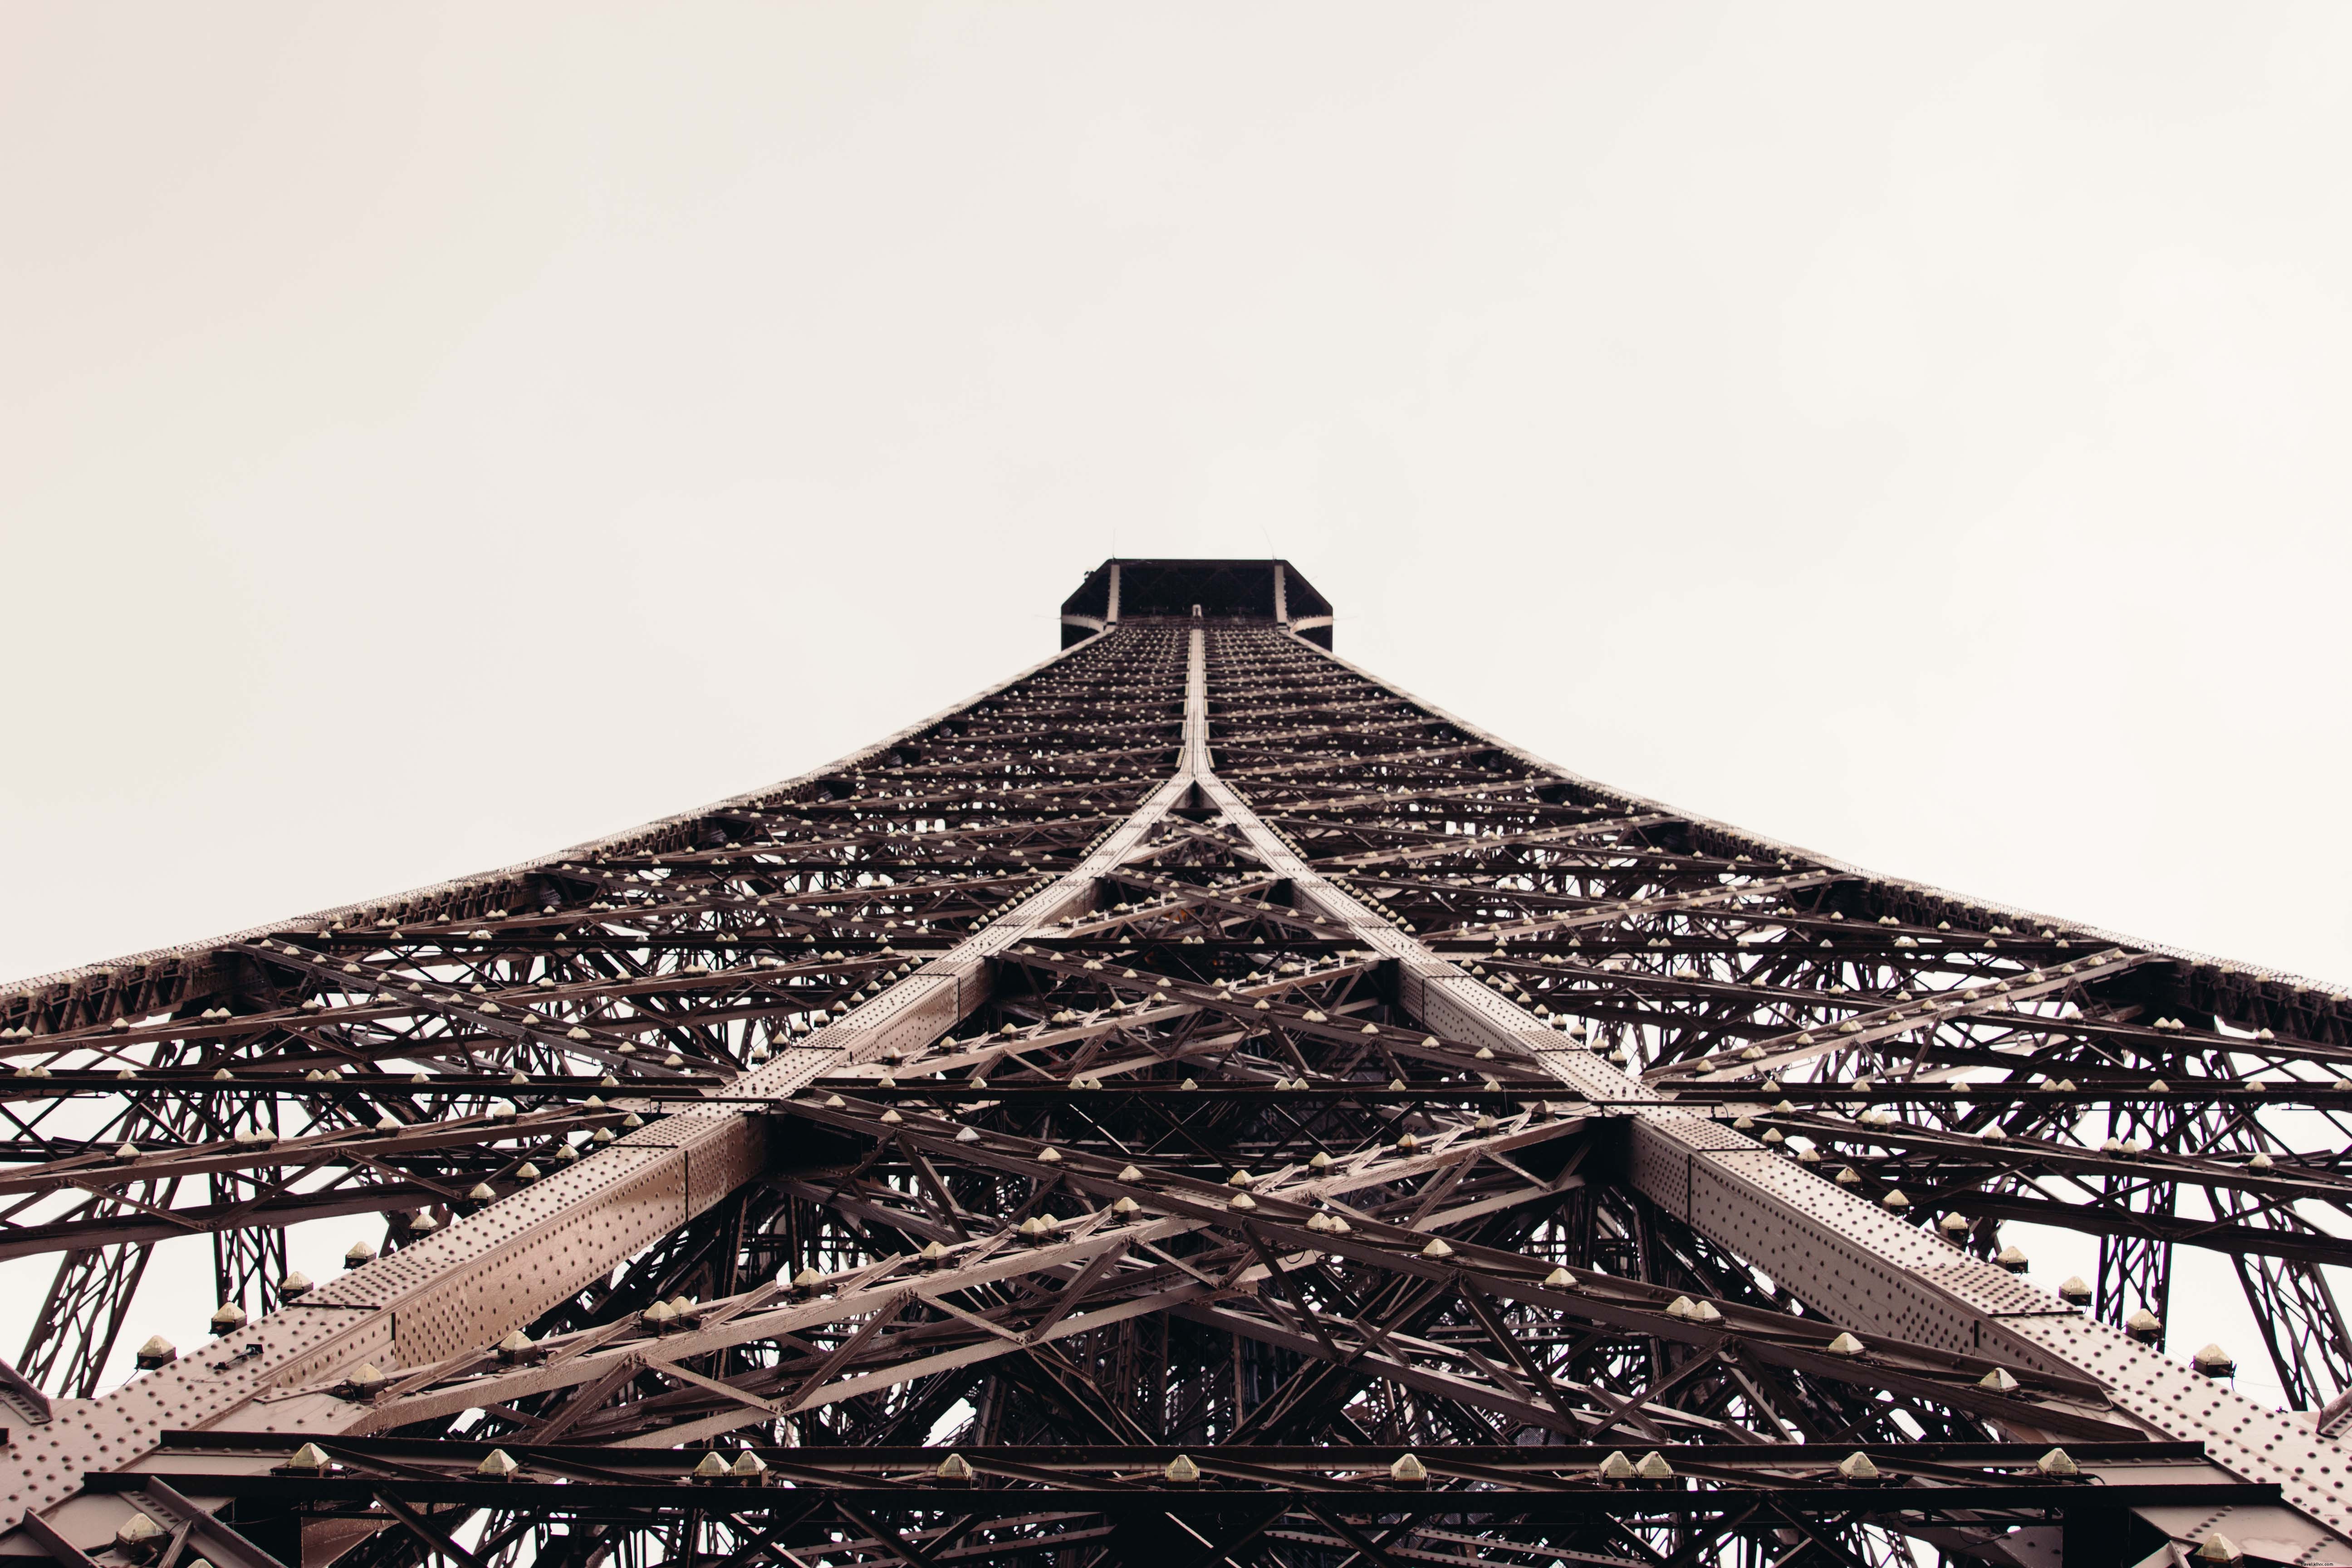 Foto de la base de la Torre Eiffel